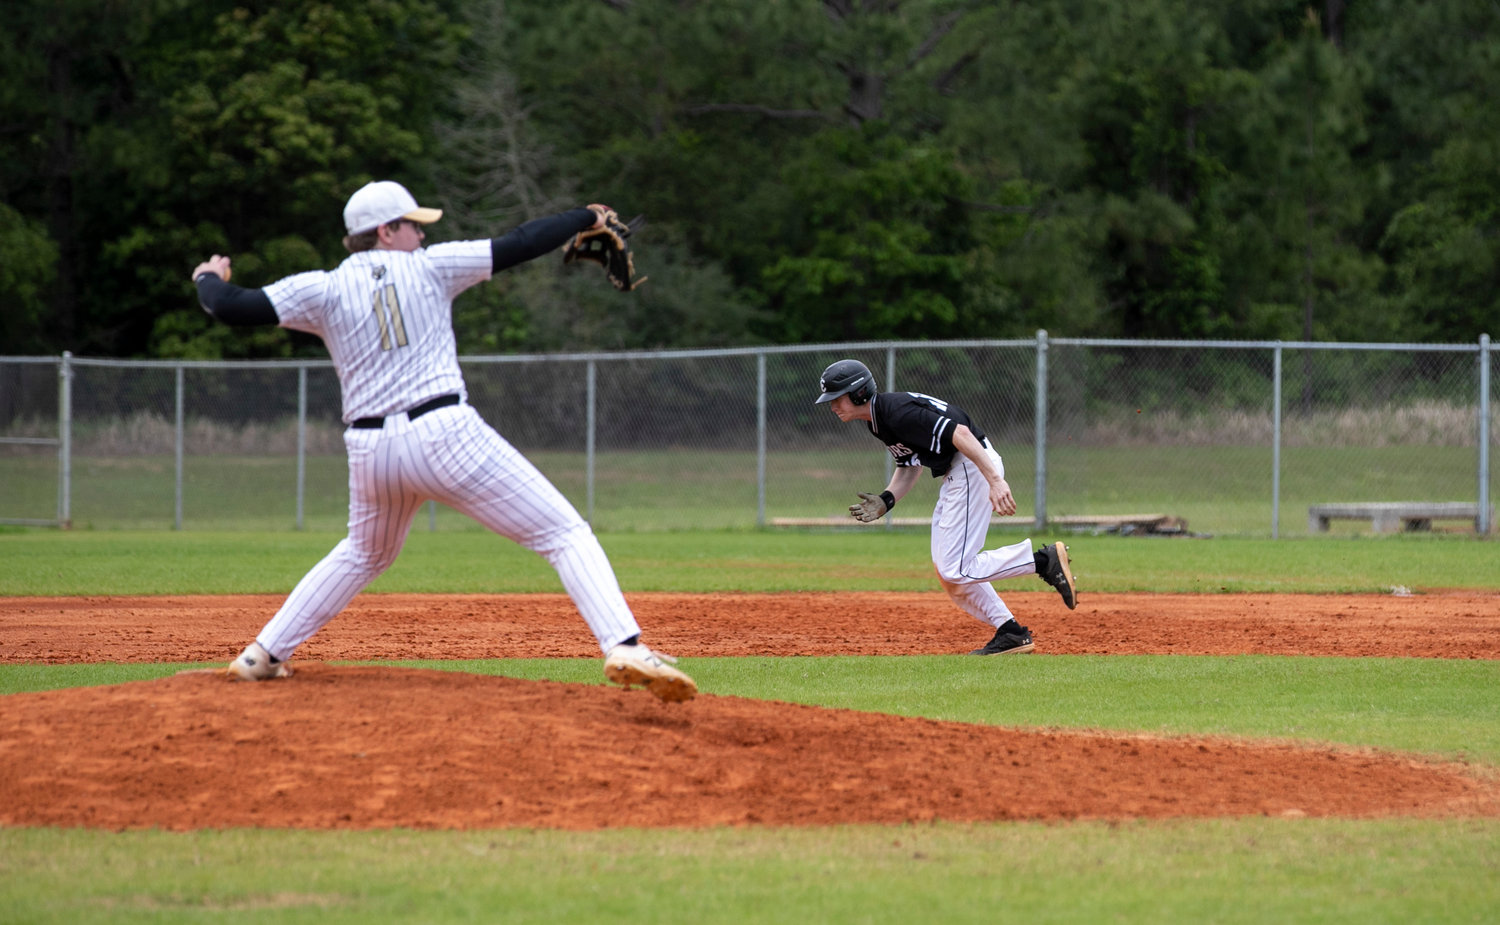 PHOTO GALLERY Gulf Coast Classic baseball, softball tournaments bring